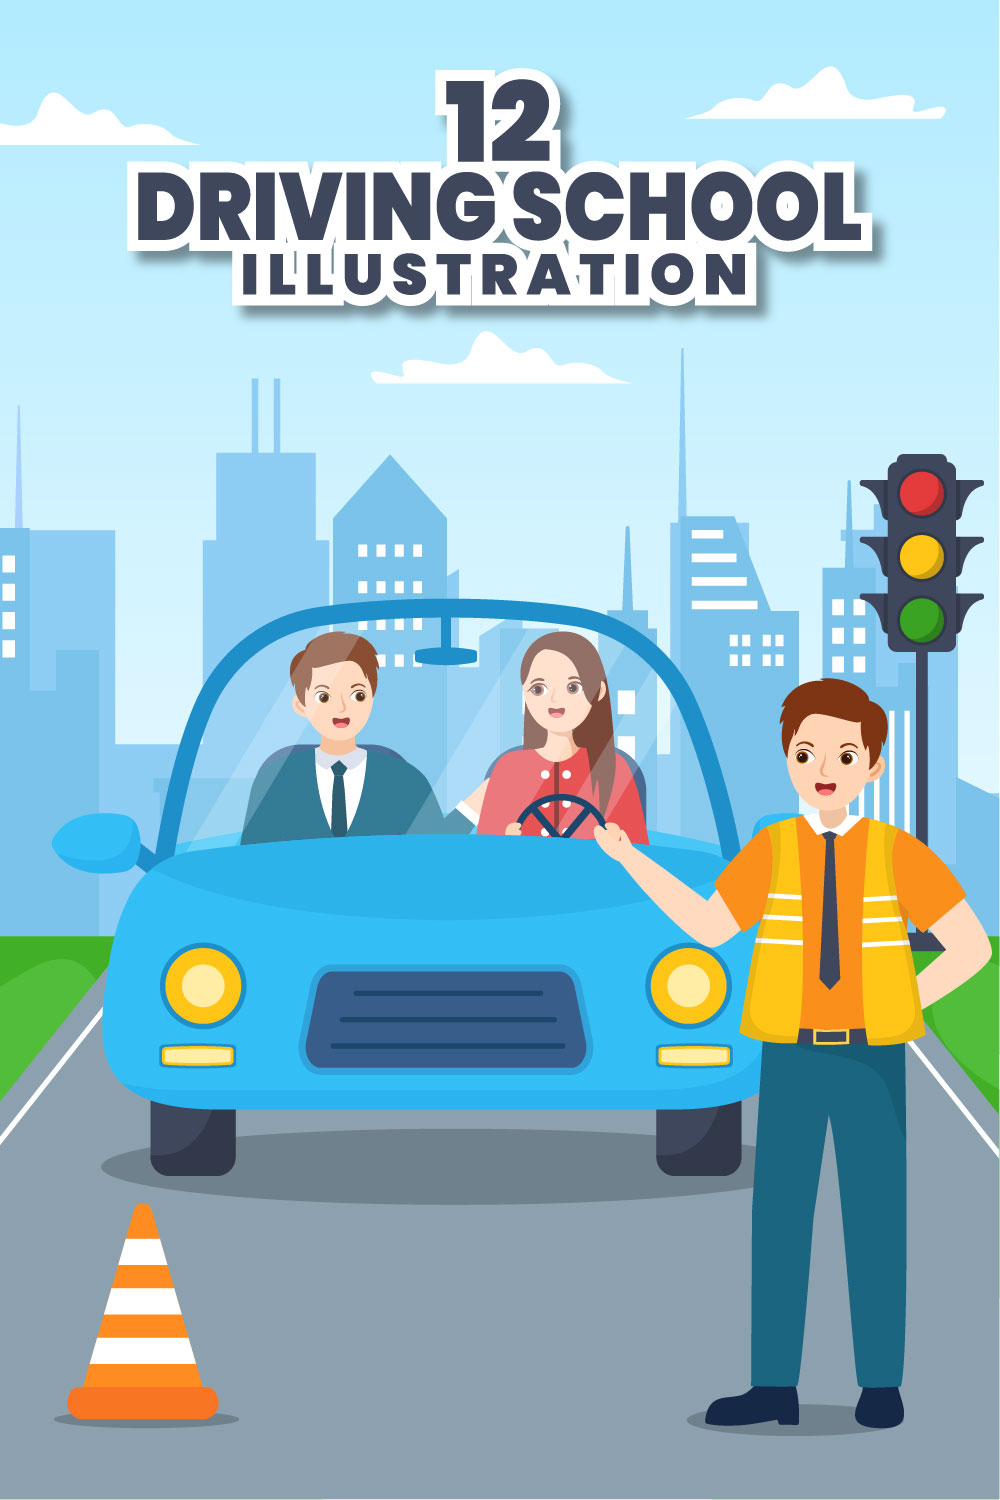 Driving School Graphics Design pinterest image.